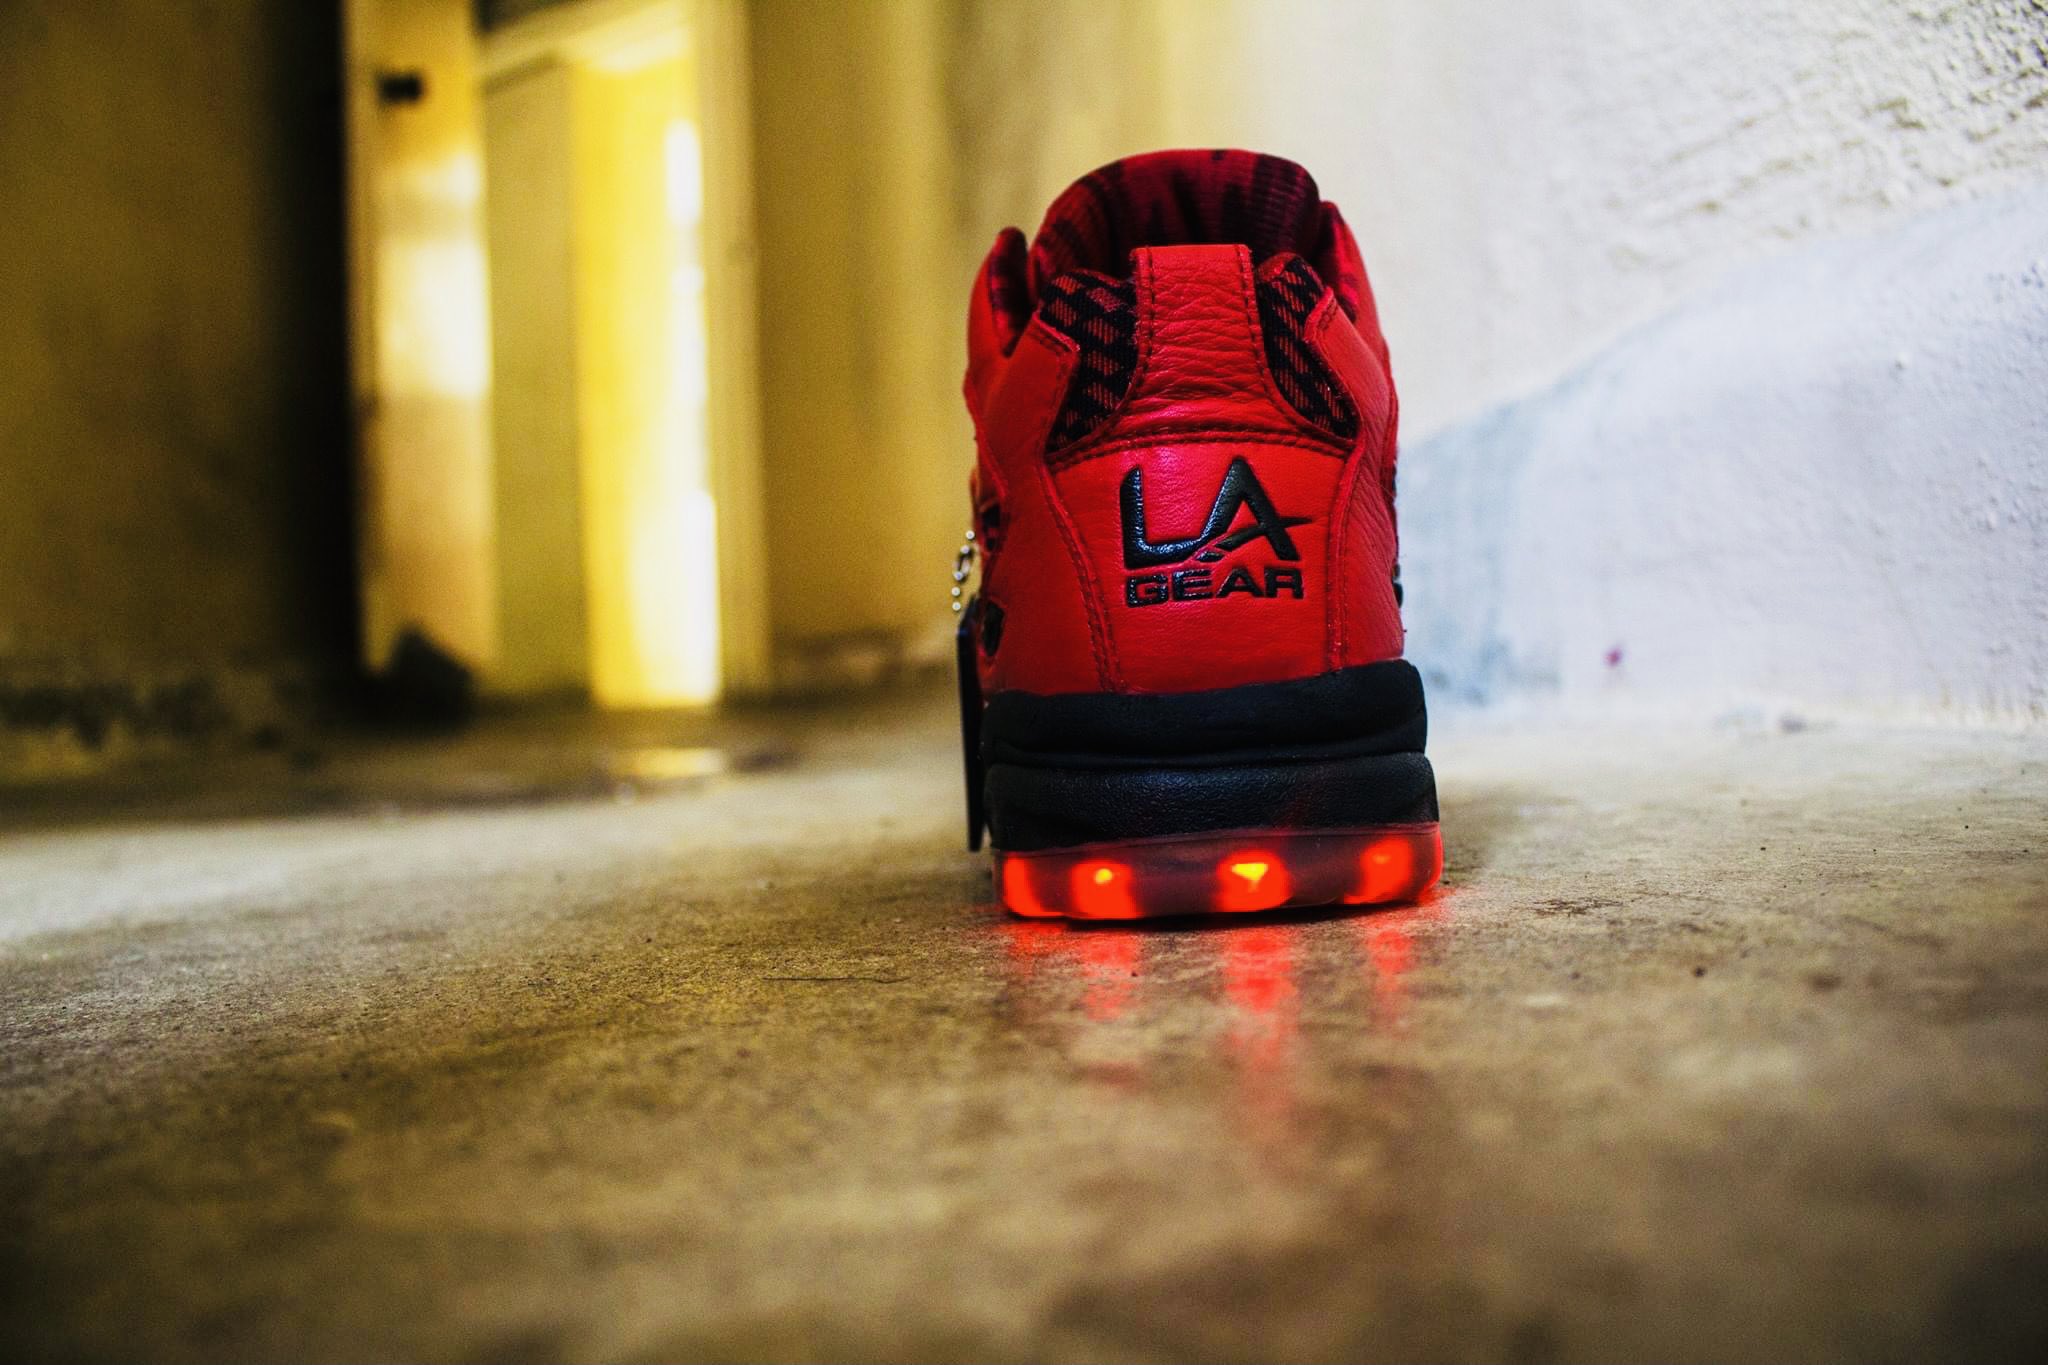 LA Gear on X: L.A. GEAR LIGHTS 👟 #LAGear #vision #LALights # greatertodaythanyesterday #shoes #shoe #firekicks #la #oldschool #cali # losangeles #californialove #photooftheday #picoftheday #photography #class   / X